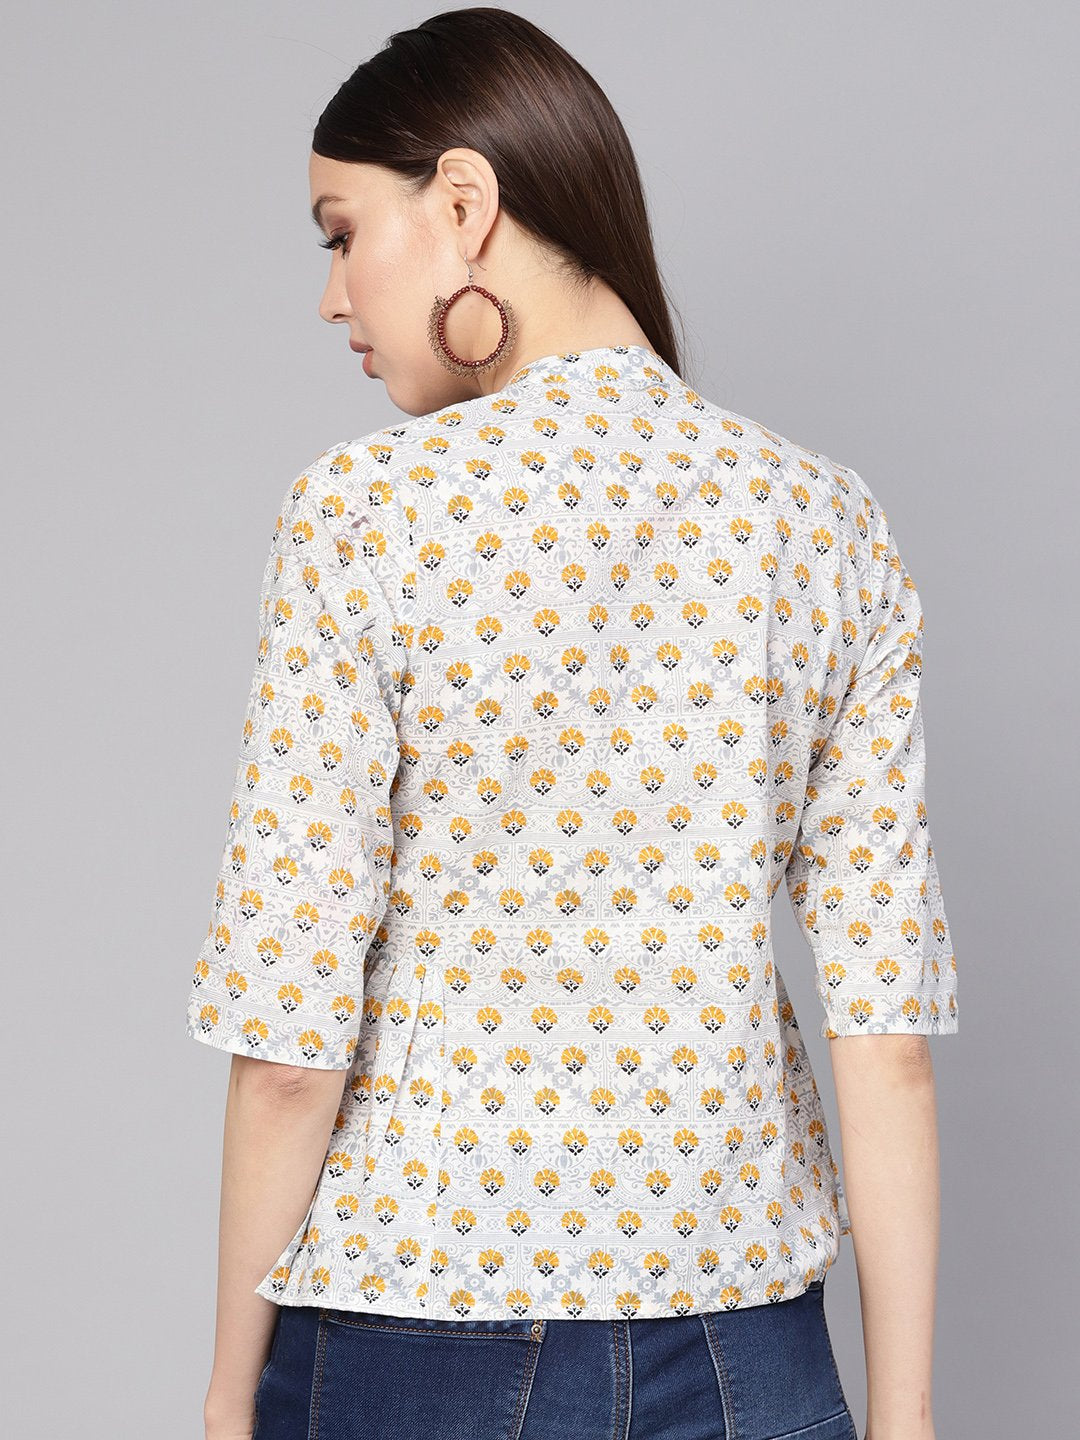 Women's Blue & Mustard Yellow Printed Shirt Style Top - Nayo Clothing